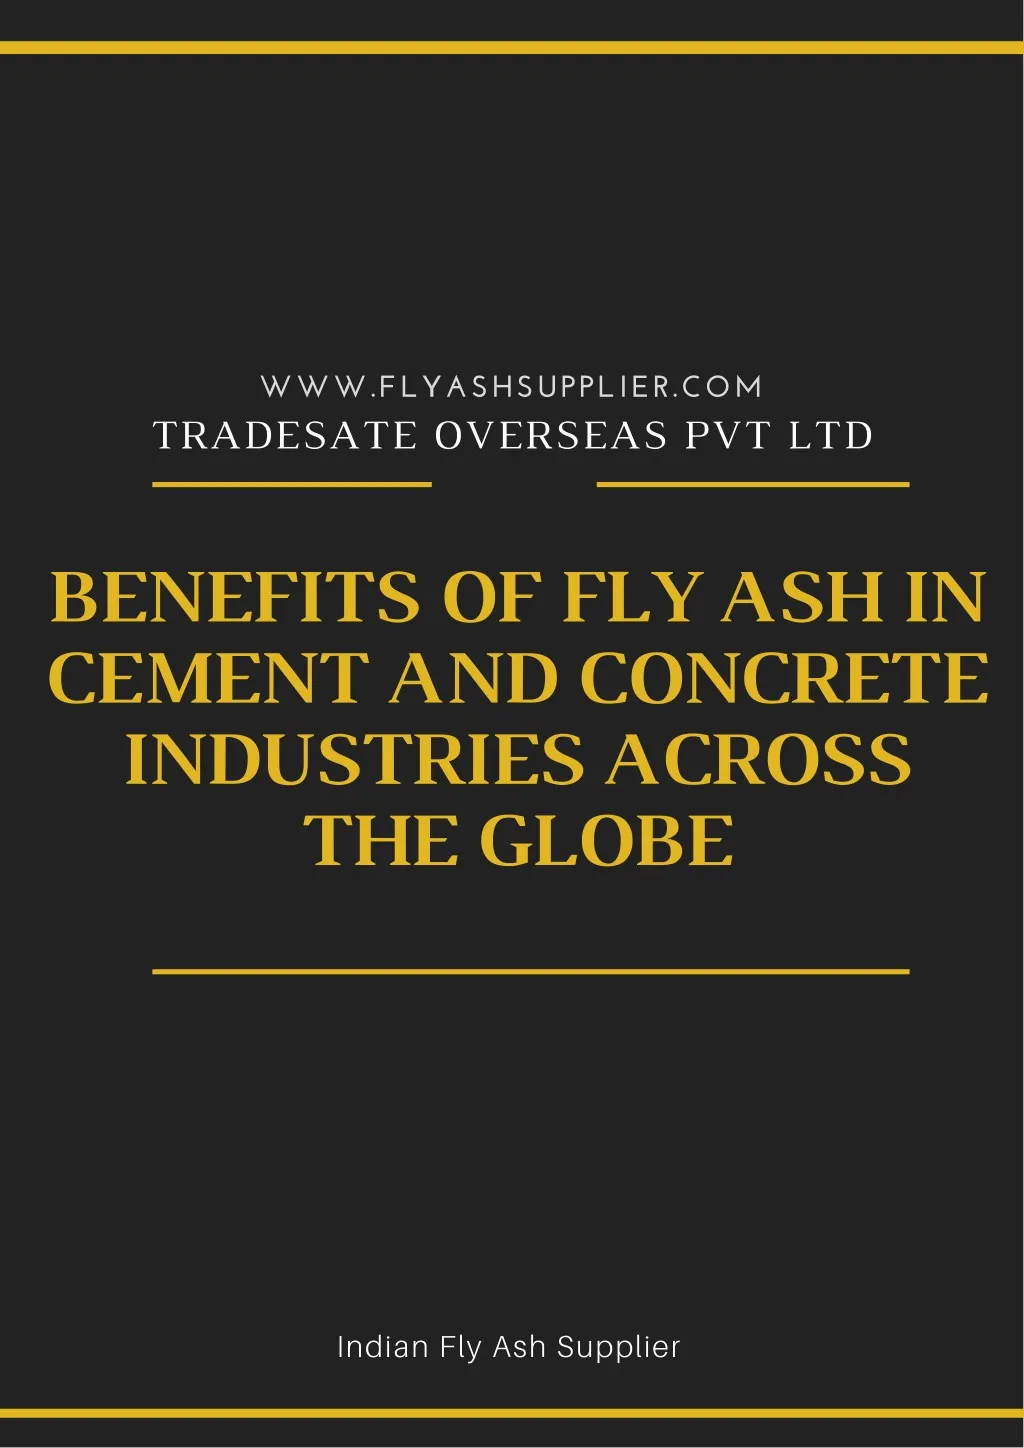 www flyashsupplier com tradesate overseas pvt ltd